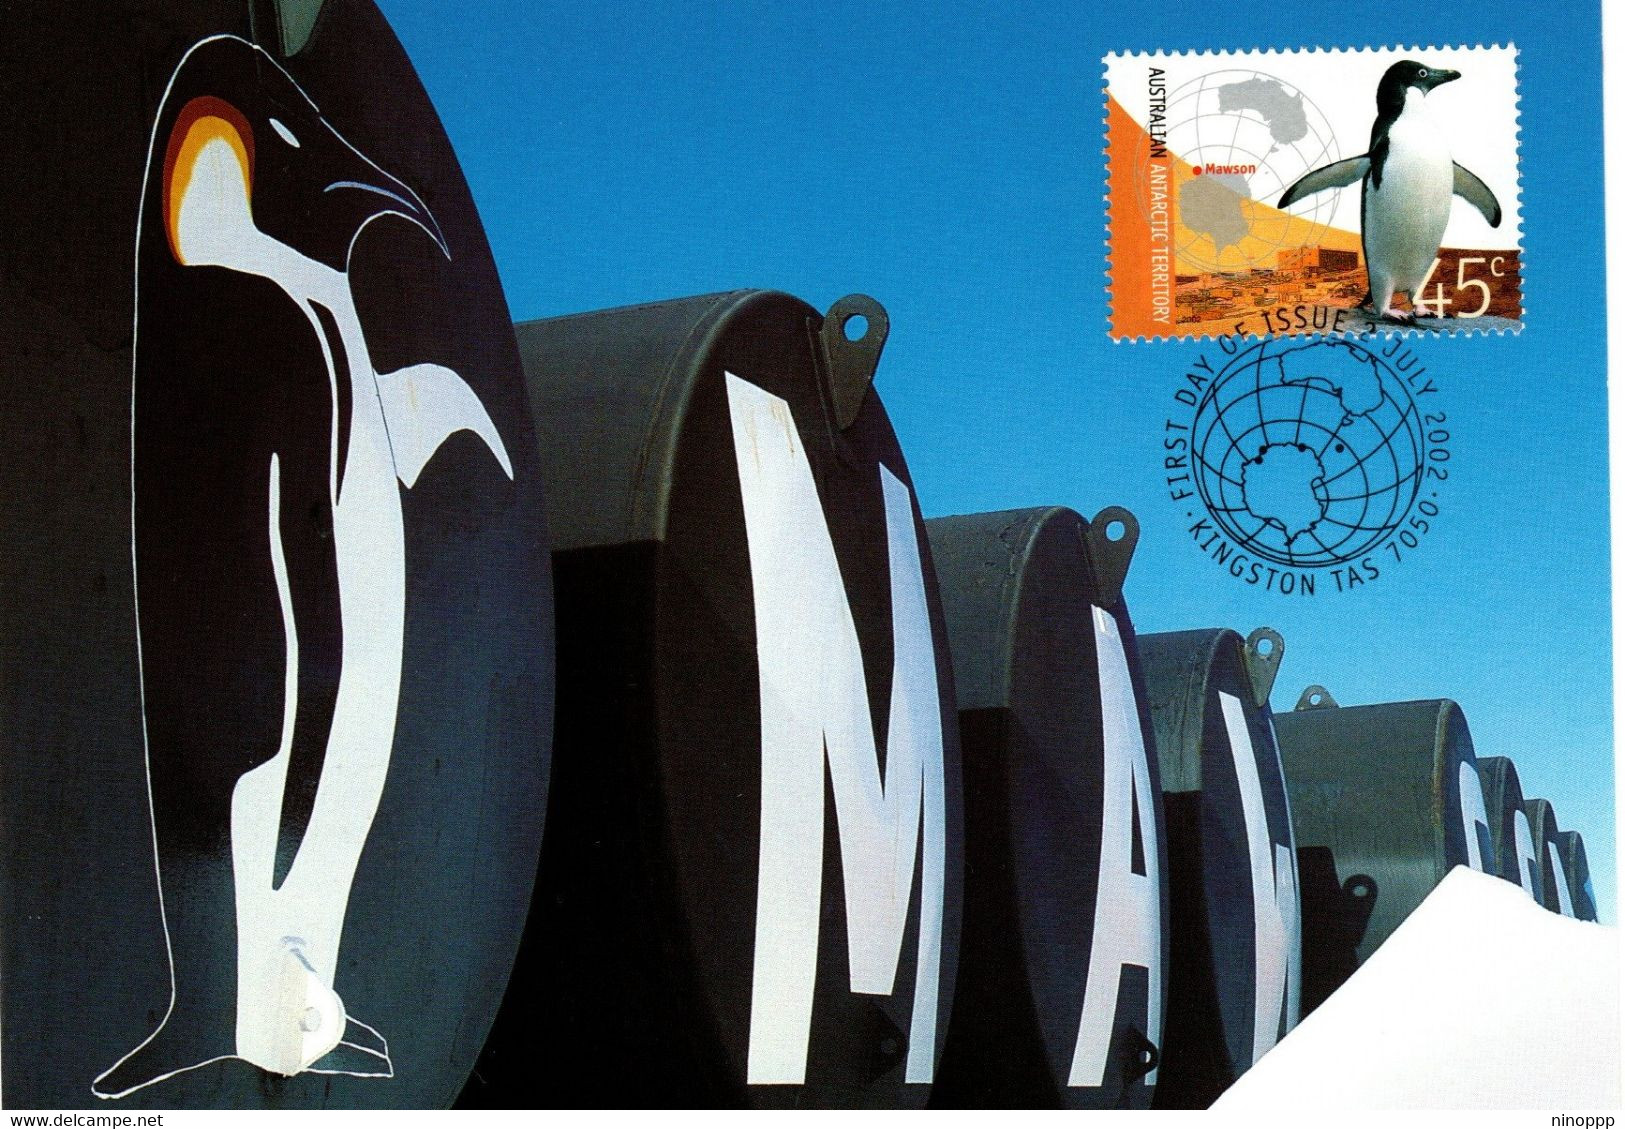 Australian Antarctic Territory 2002 Antarctic Research,Mawson Station,maximum Card - Tarjetas – Máxima